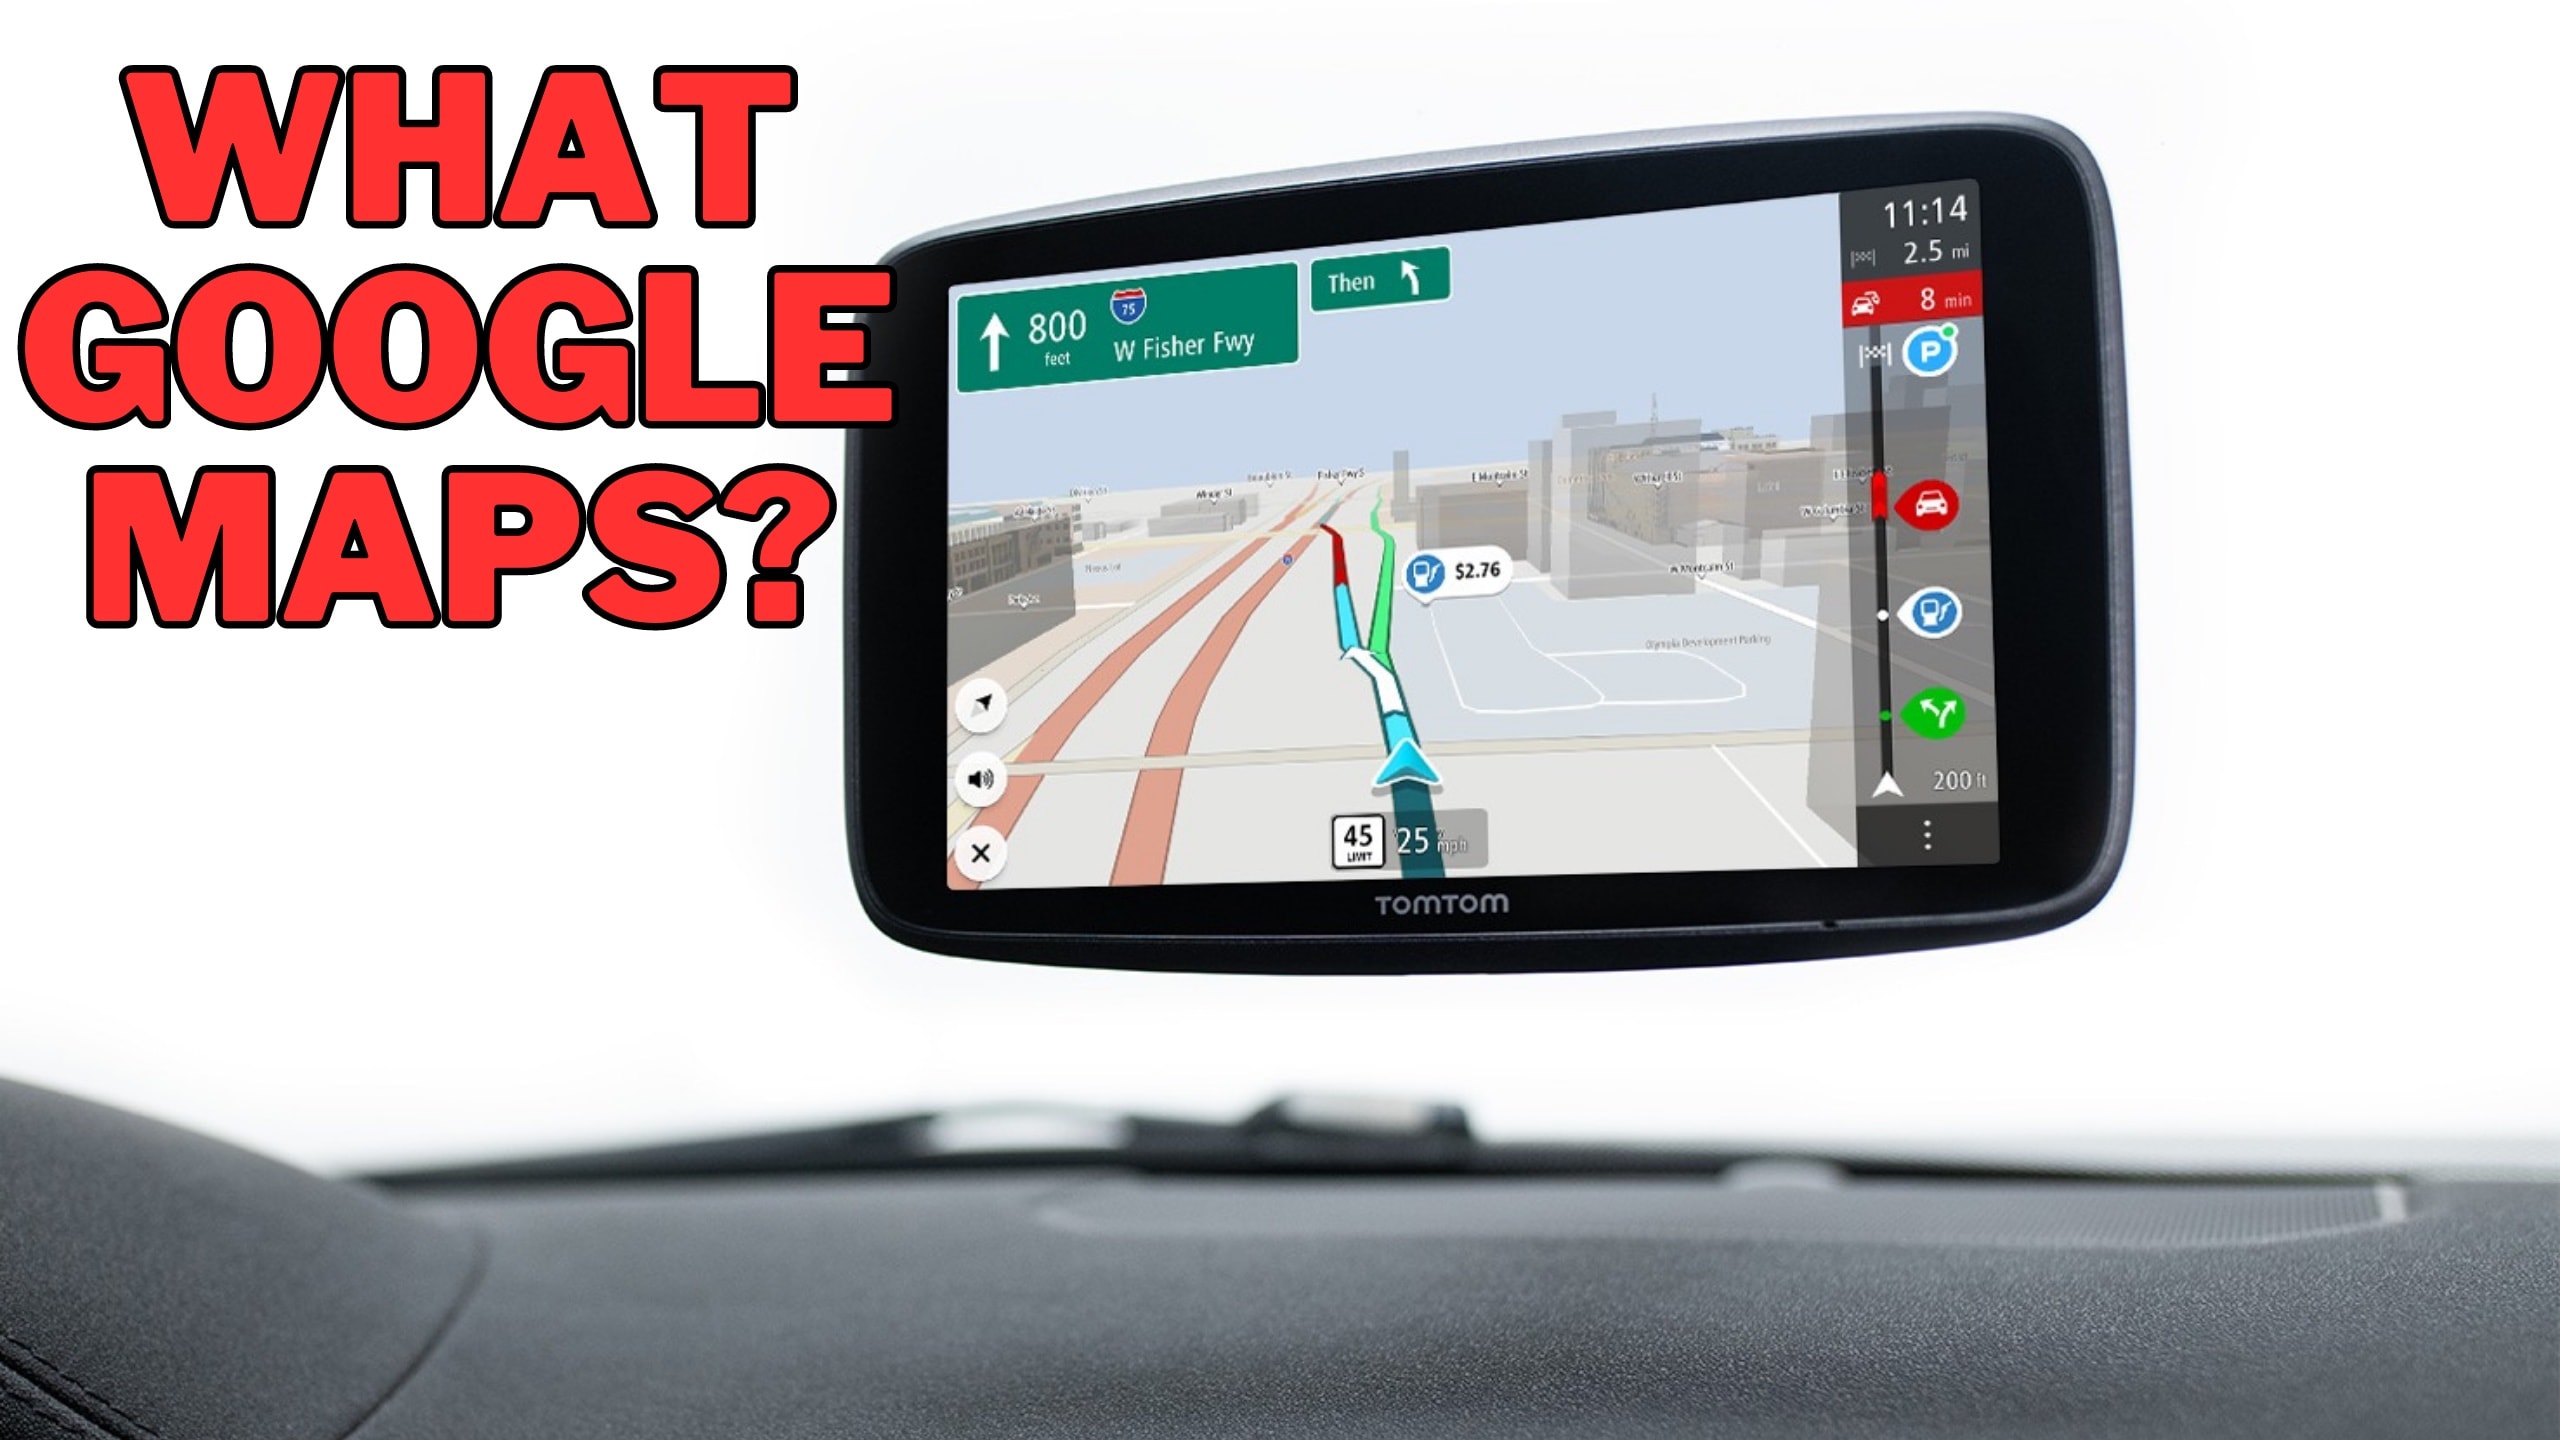 TomTom's Top GPS Navigator Makes Google Maps and autoevolution